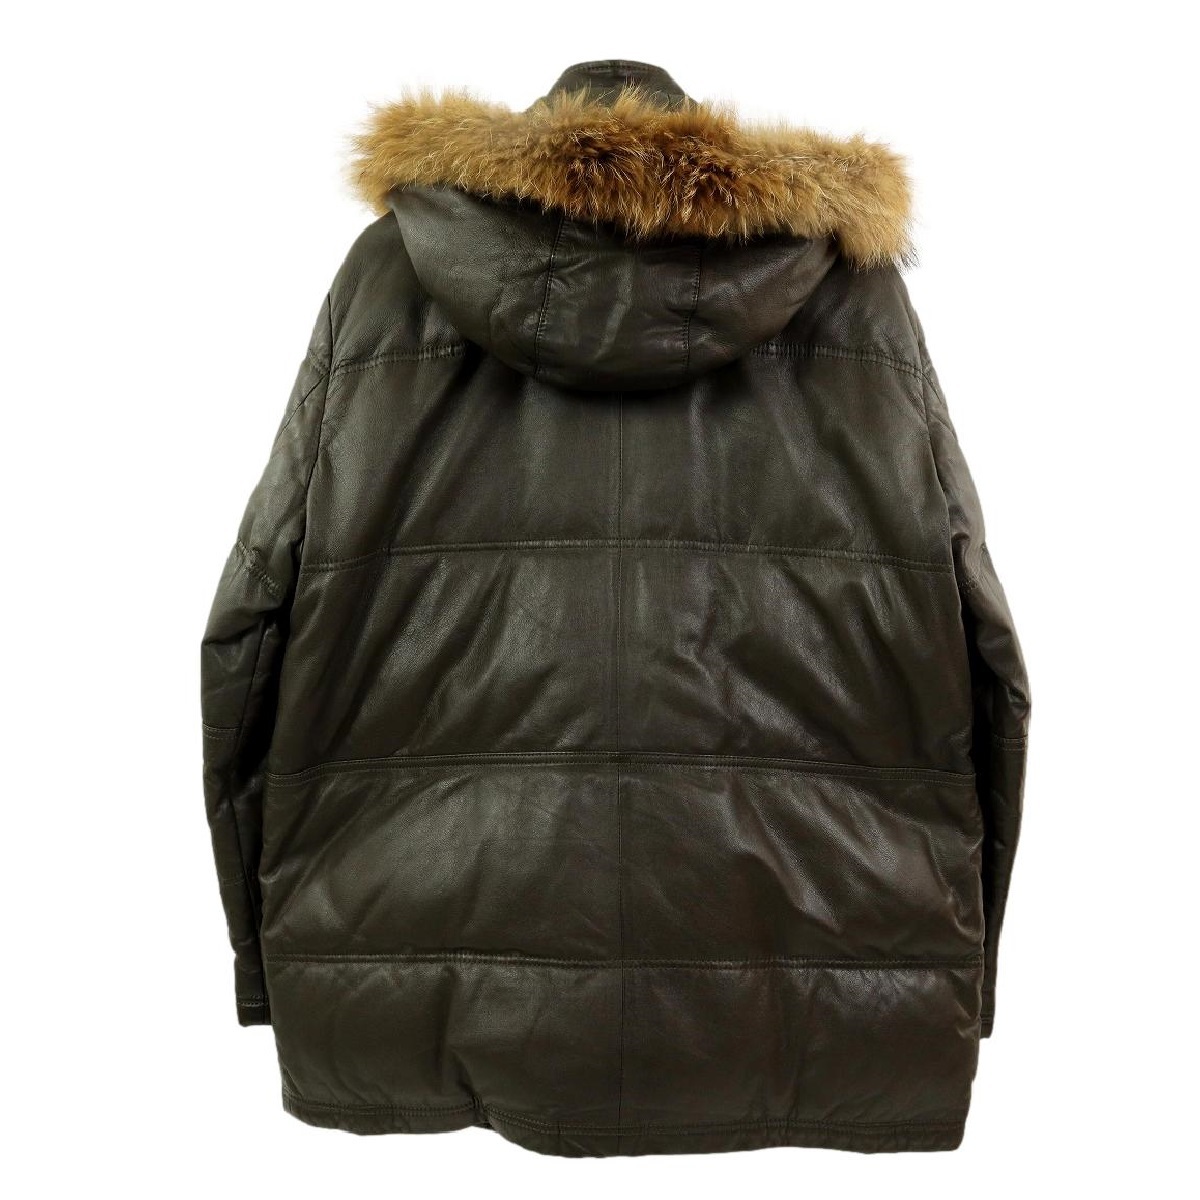 [B1996][ ultimate beautiful goods ][ big size LL]WIND ARMOR window armor - down jacket leather jacket N-3B flight jacket sheep leather 